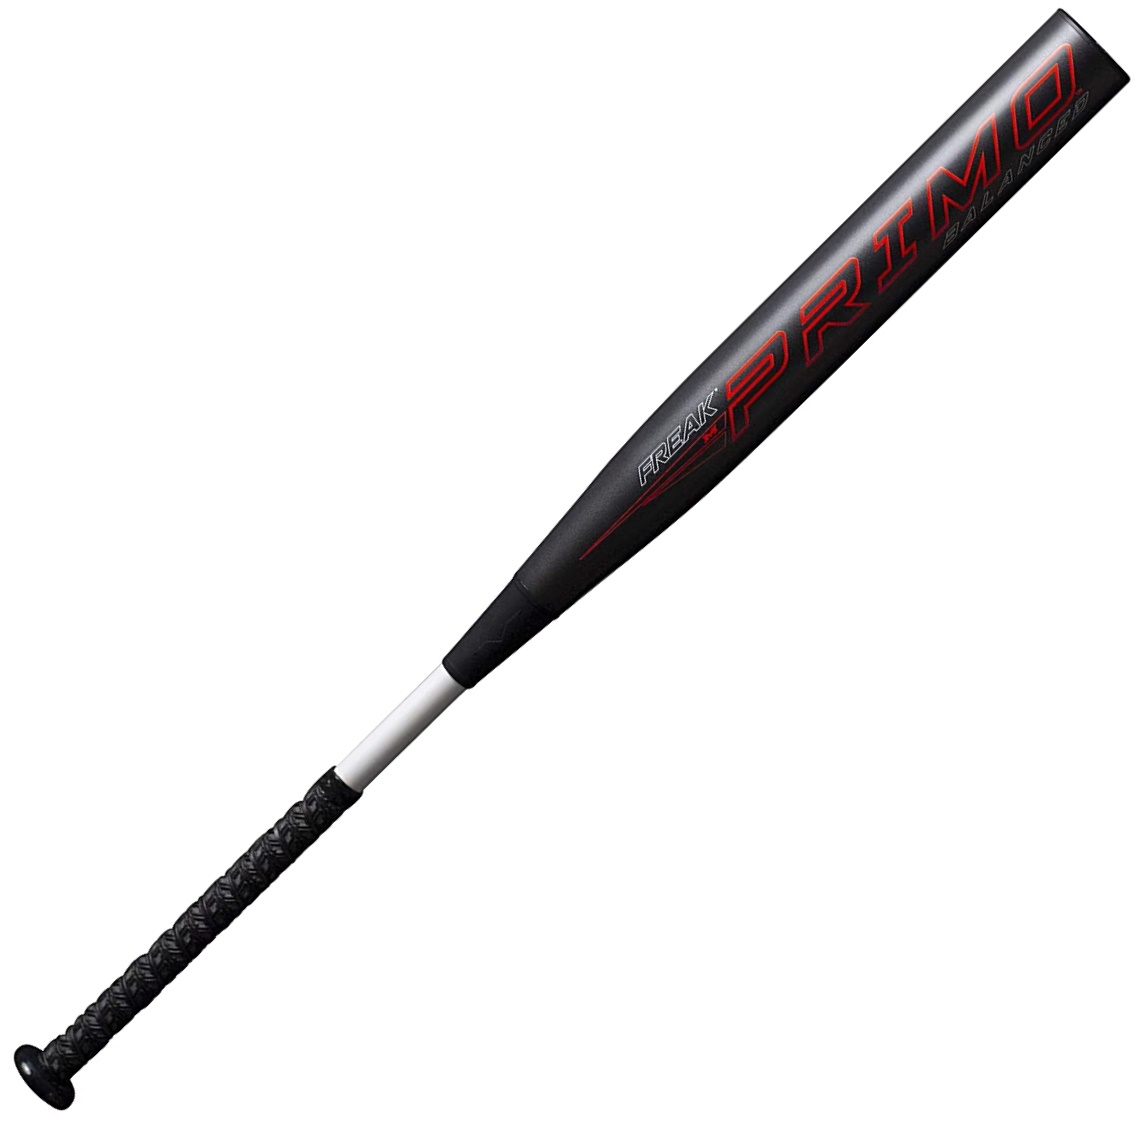 miken-freak-primo-14-usa-asa-balanced-slowpitch-softball-bat-34-inch-28-oz MP21BA-3-28 Miken  The 2021 Freak Primo balanced USA bat offers a superior feel